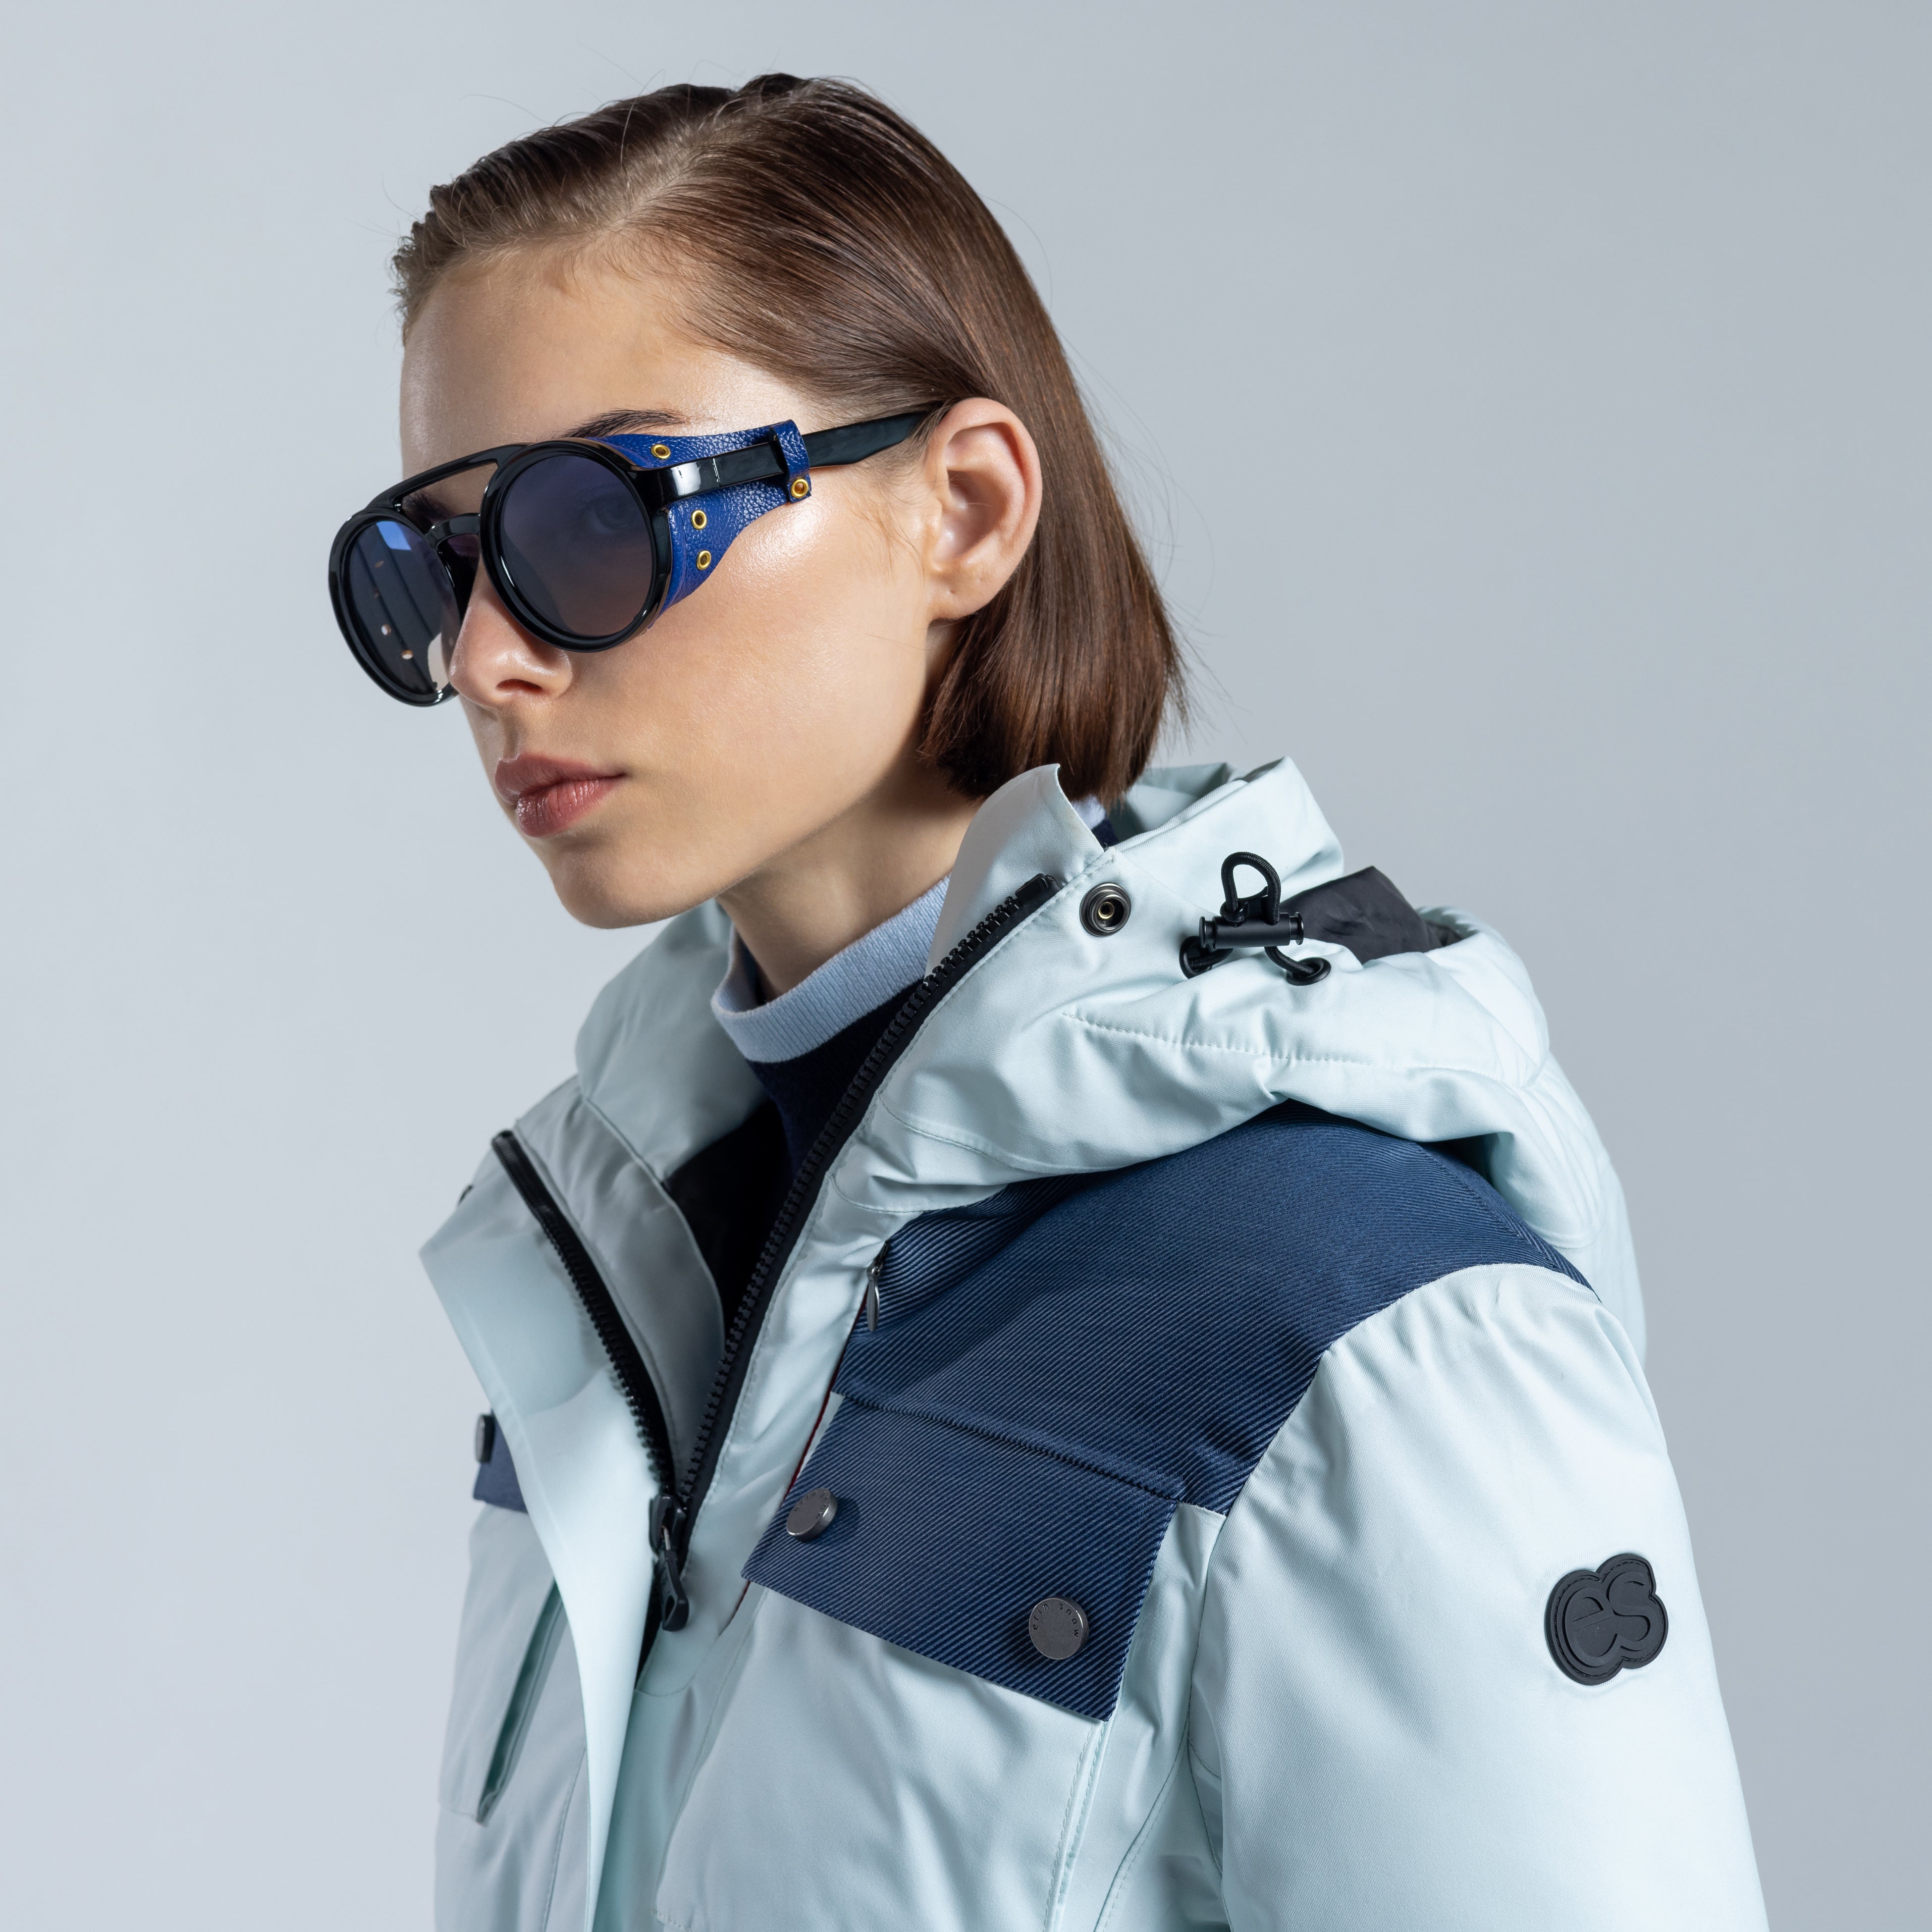 Erin Snow Eco Sporty Luna Ski Suit size 8 HoodevcPrimaLoft Waterproof NWT